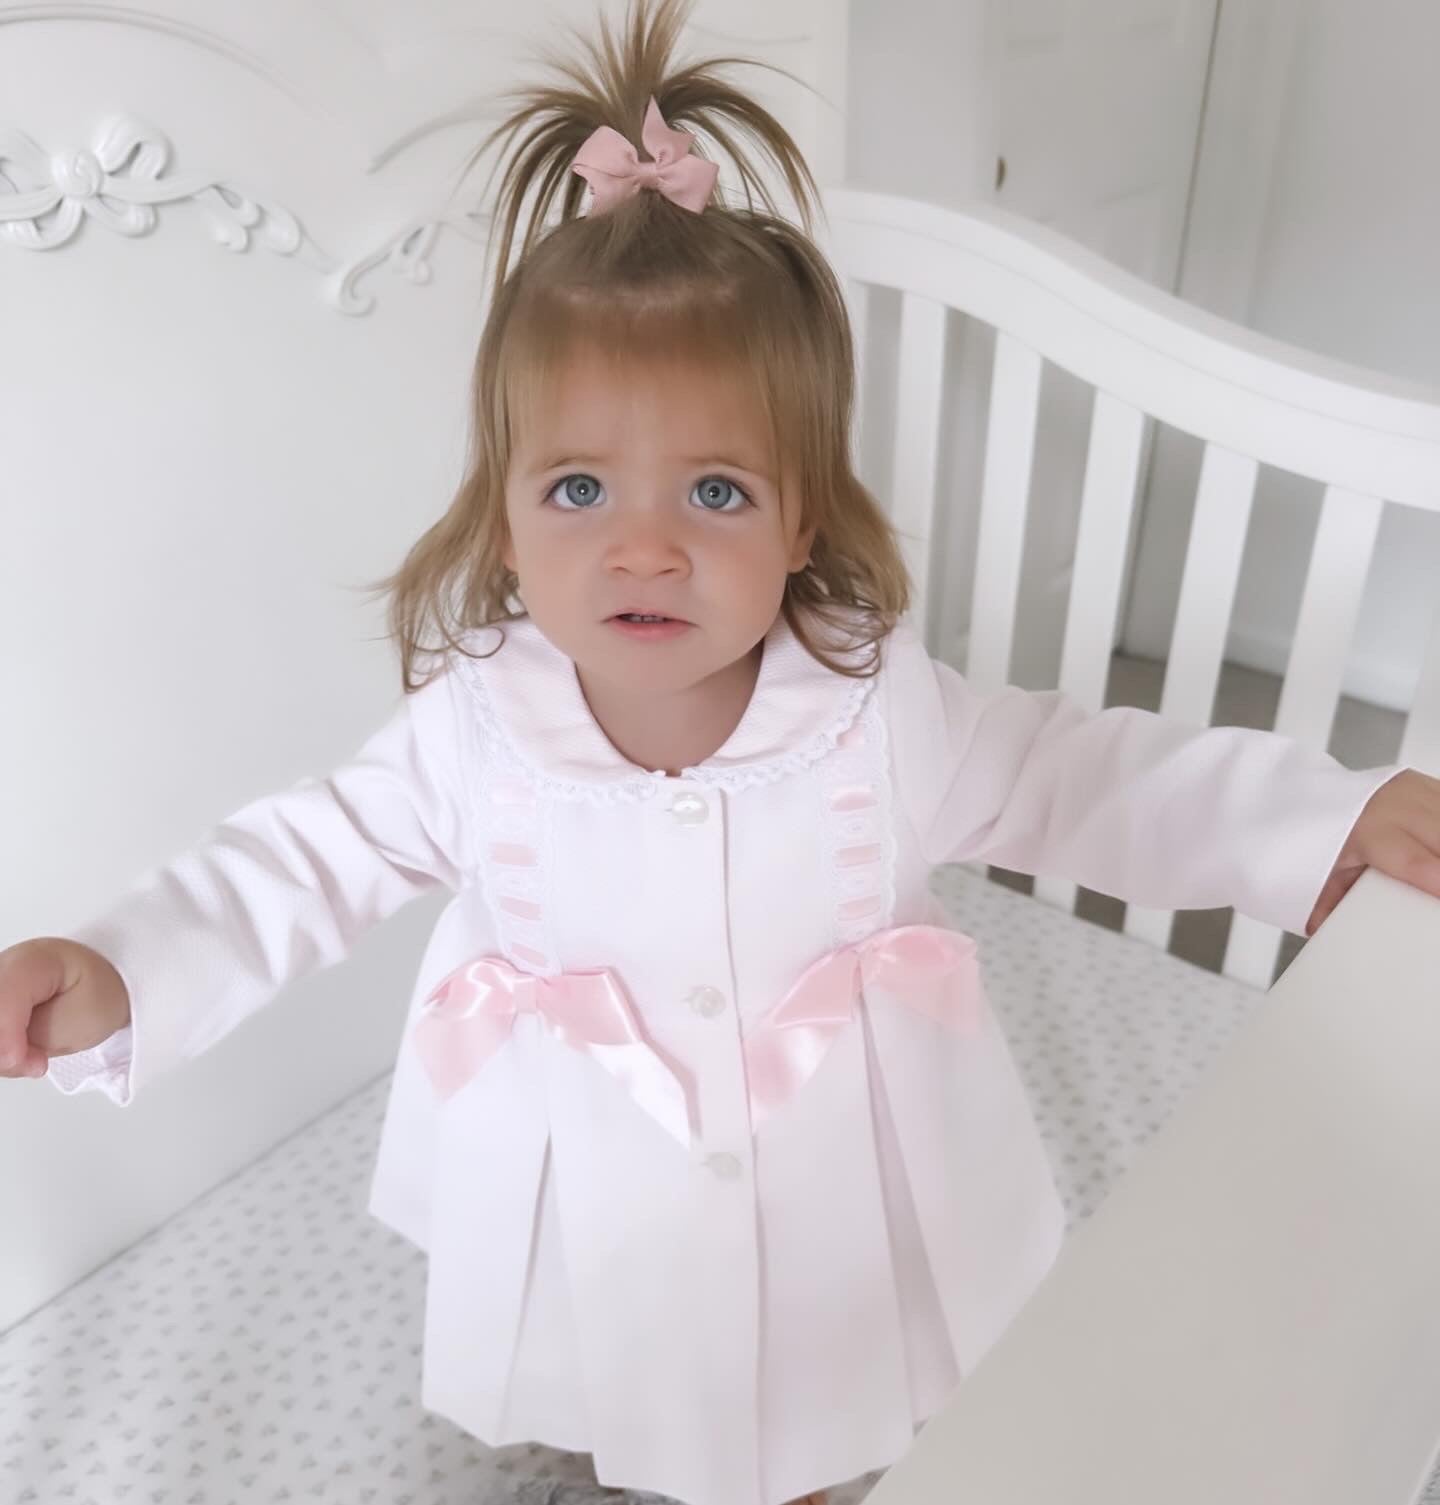 Luxury Pink Bows Jacket - Ella Marina Baby